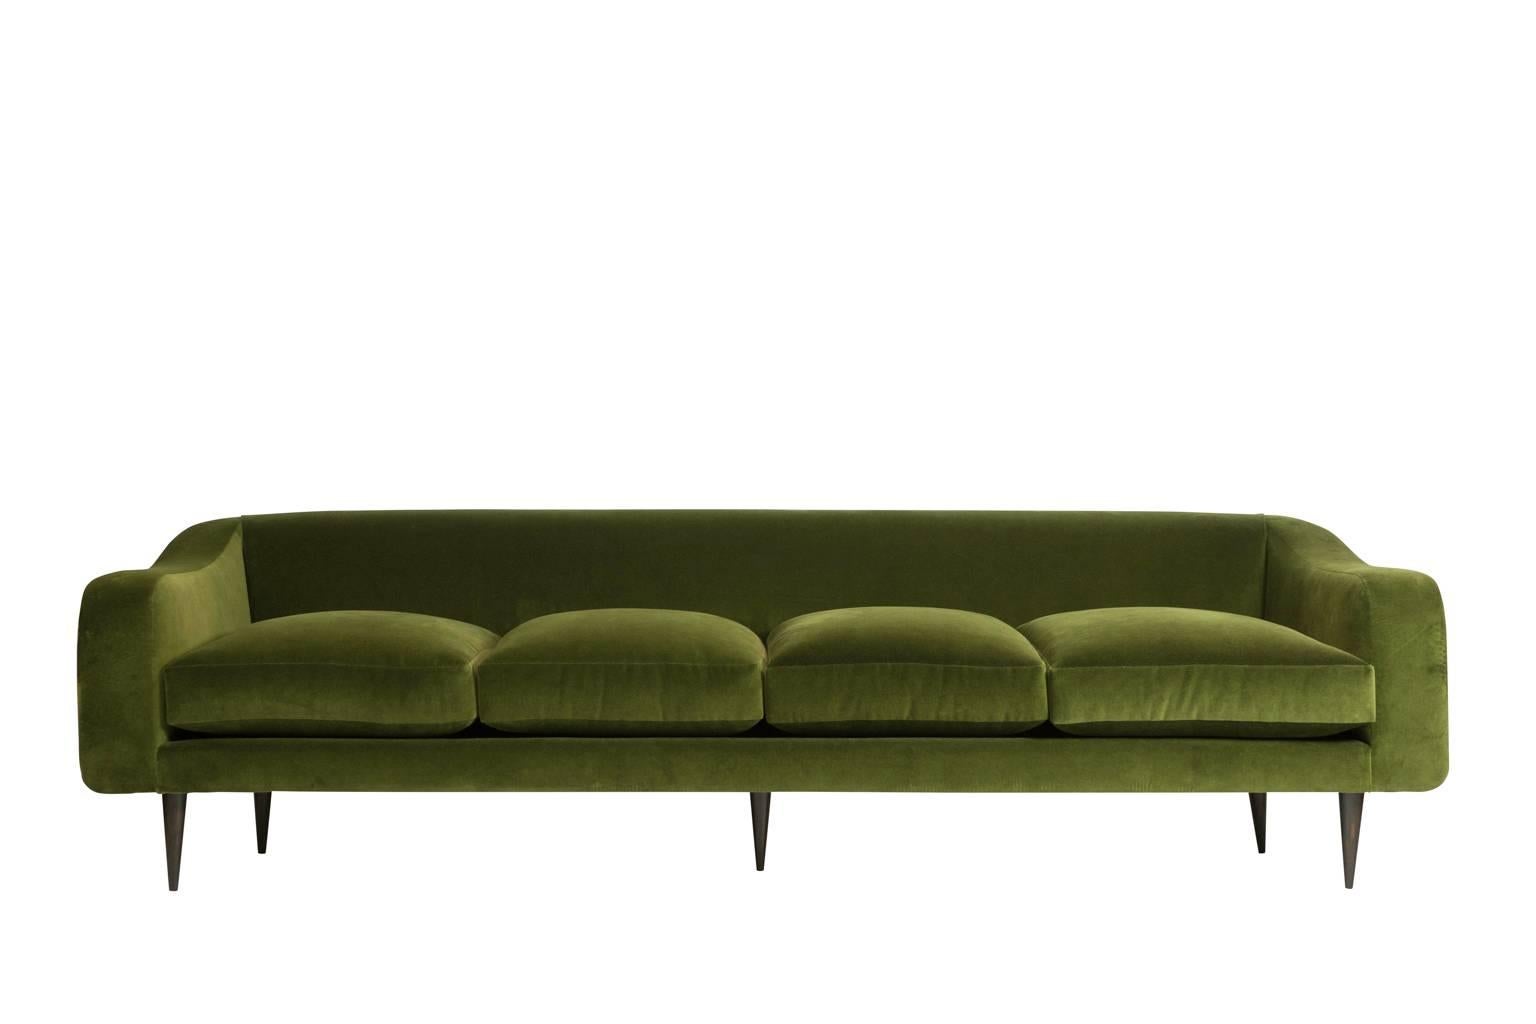 Mid-Century Modern sofa designed by Joaquim Tenreiro. Brazilian rosewood (jacaranda) legs. Newly upholstered in green cotton velvet. Pair of matching armchairs available.